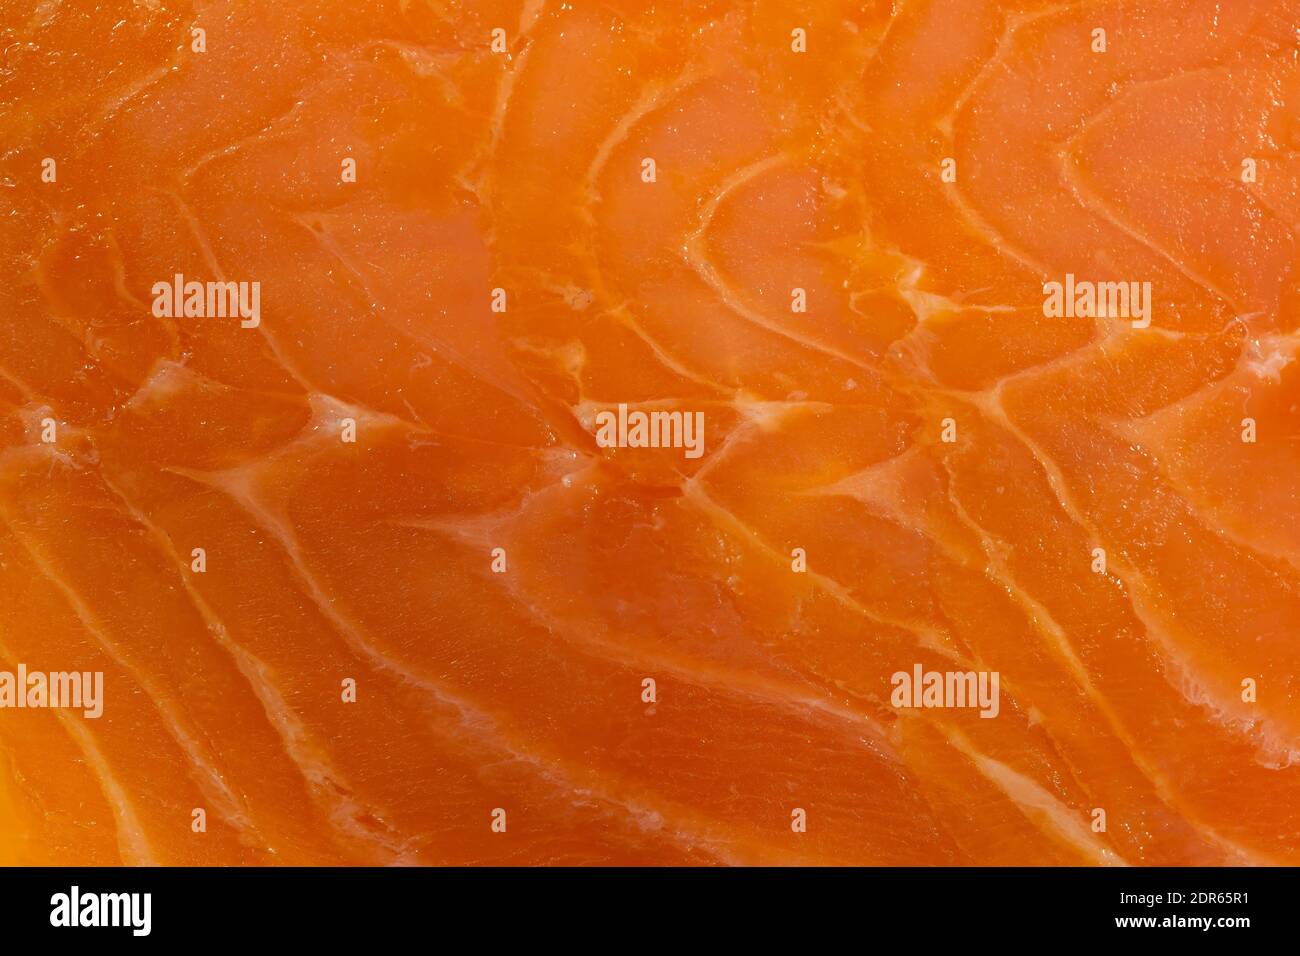 Smoked salmon texture close up Stock Photo